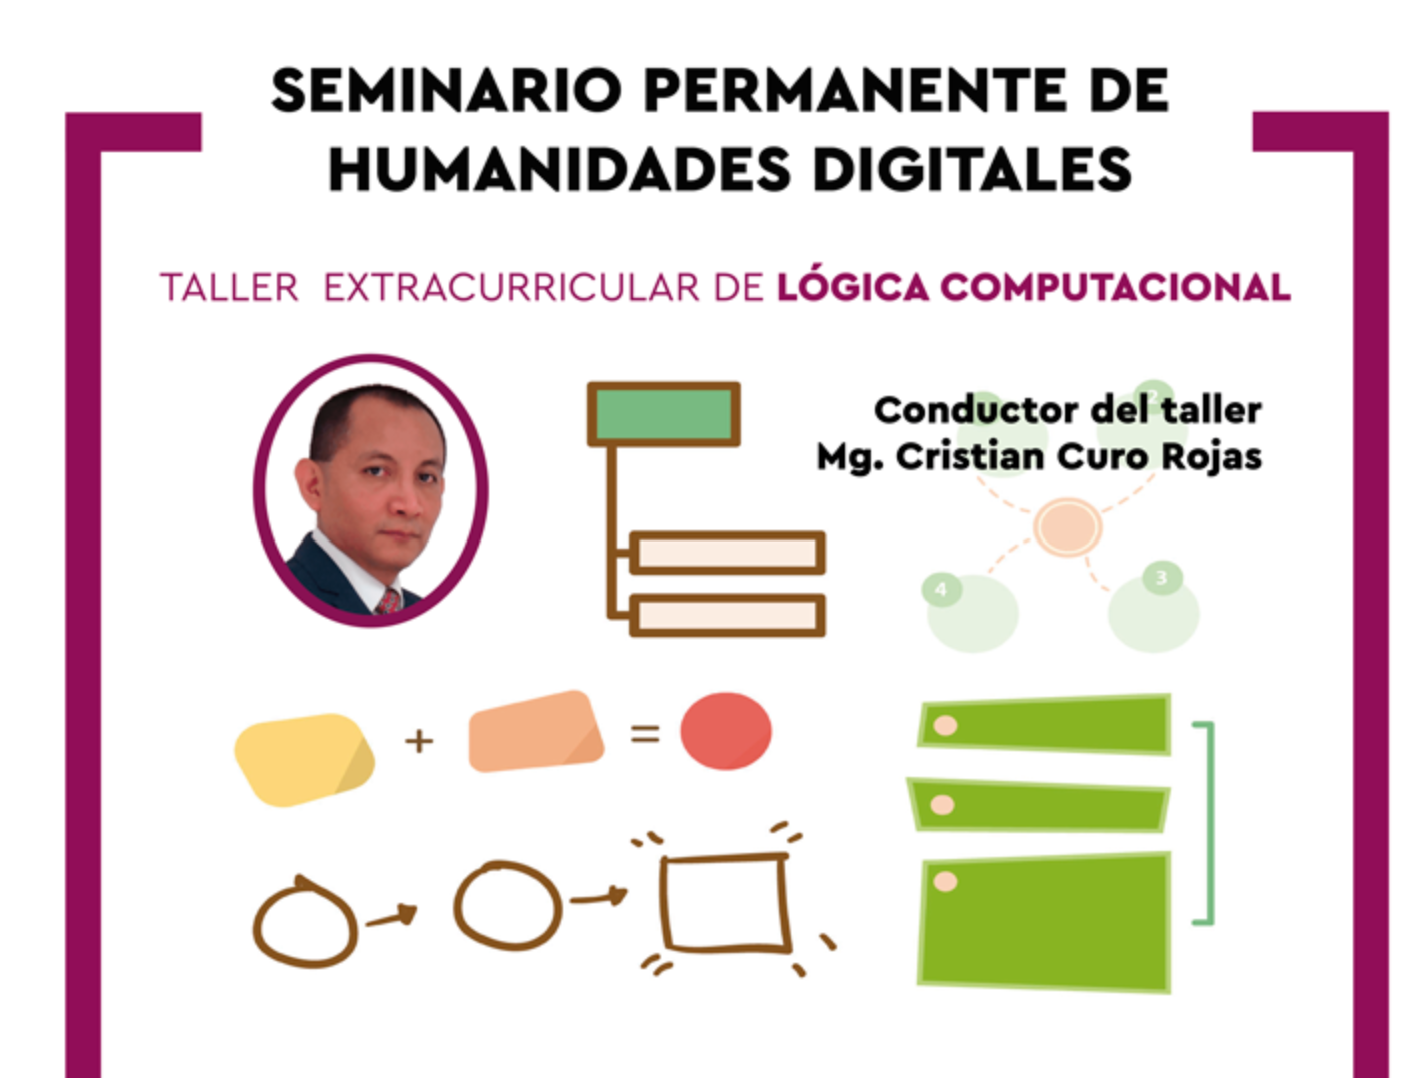 Humanidades digitales: “Taller extracurricular de Lógica Computacional”